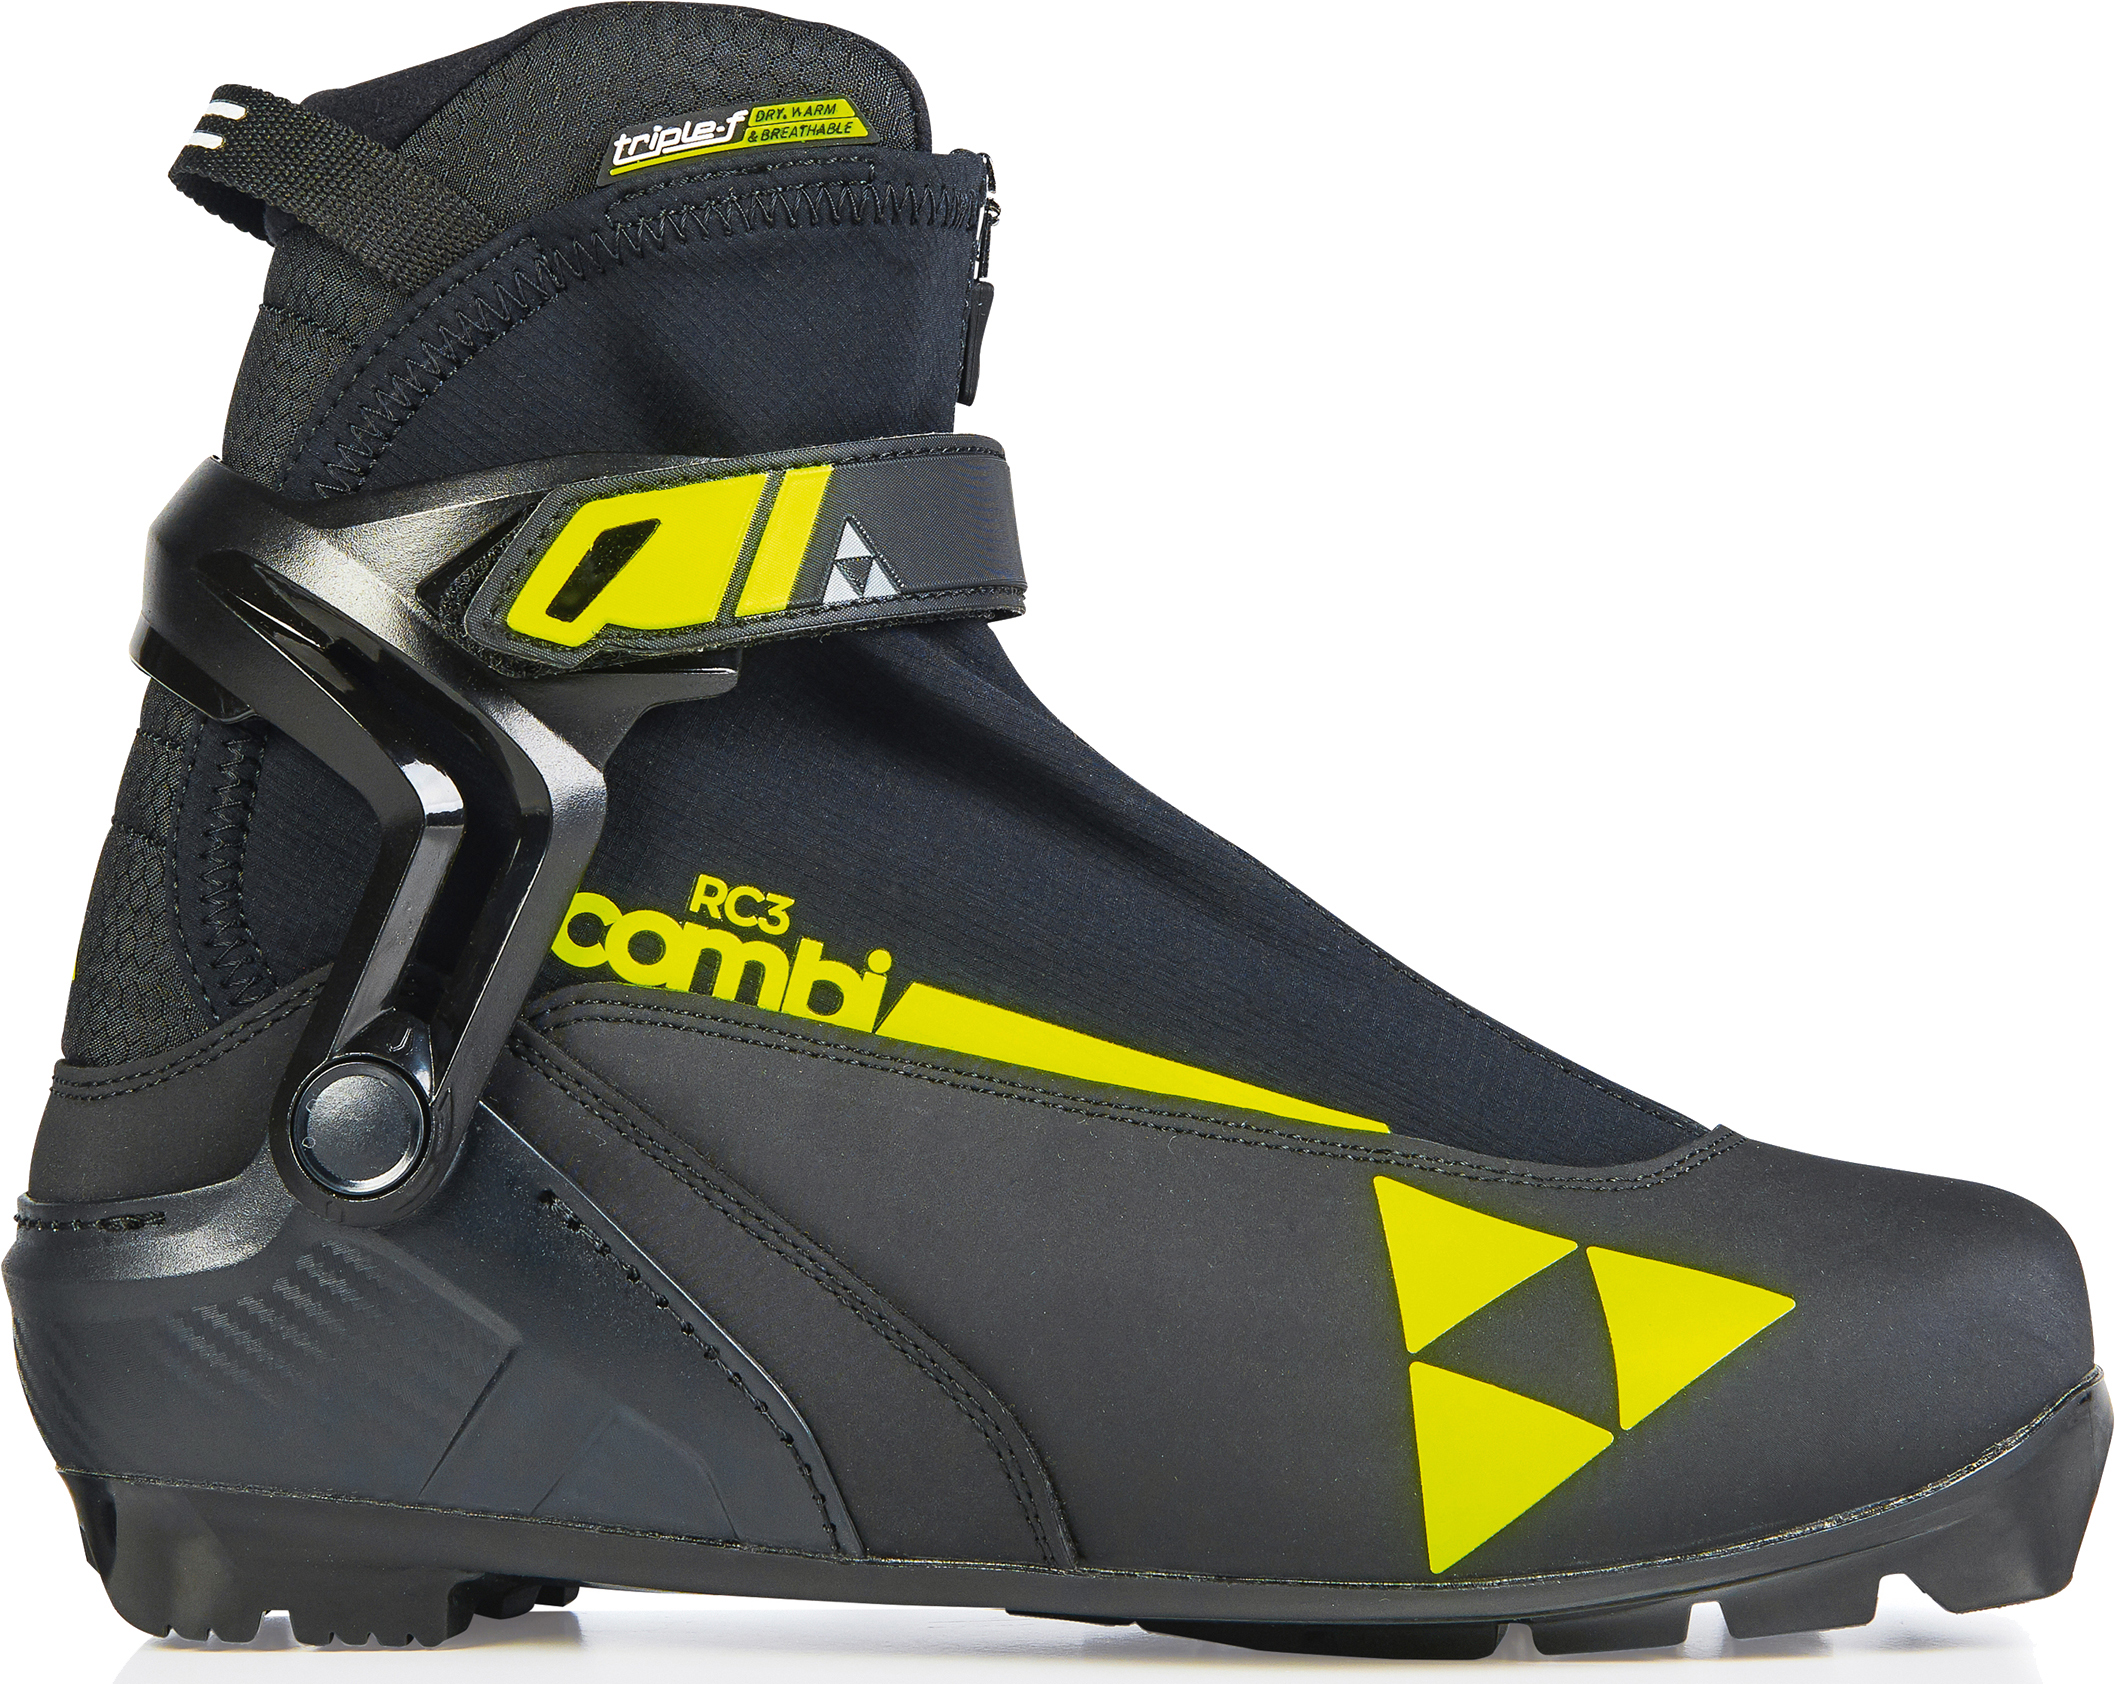 Лыжные ботинки Fischer RC3 Combi 42